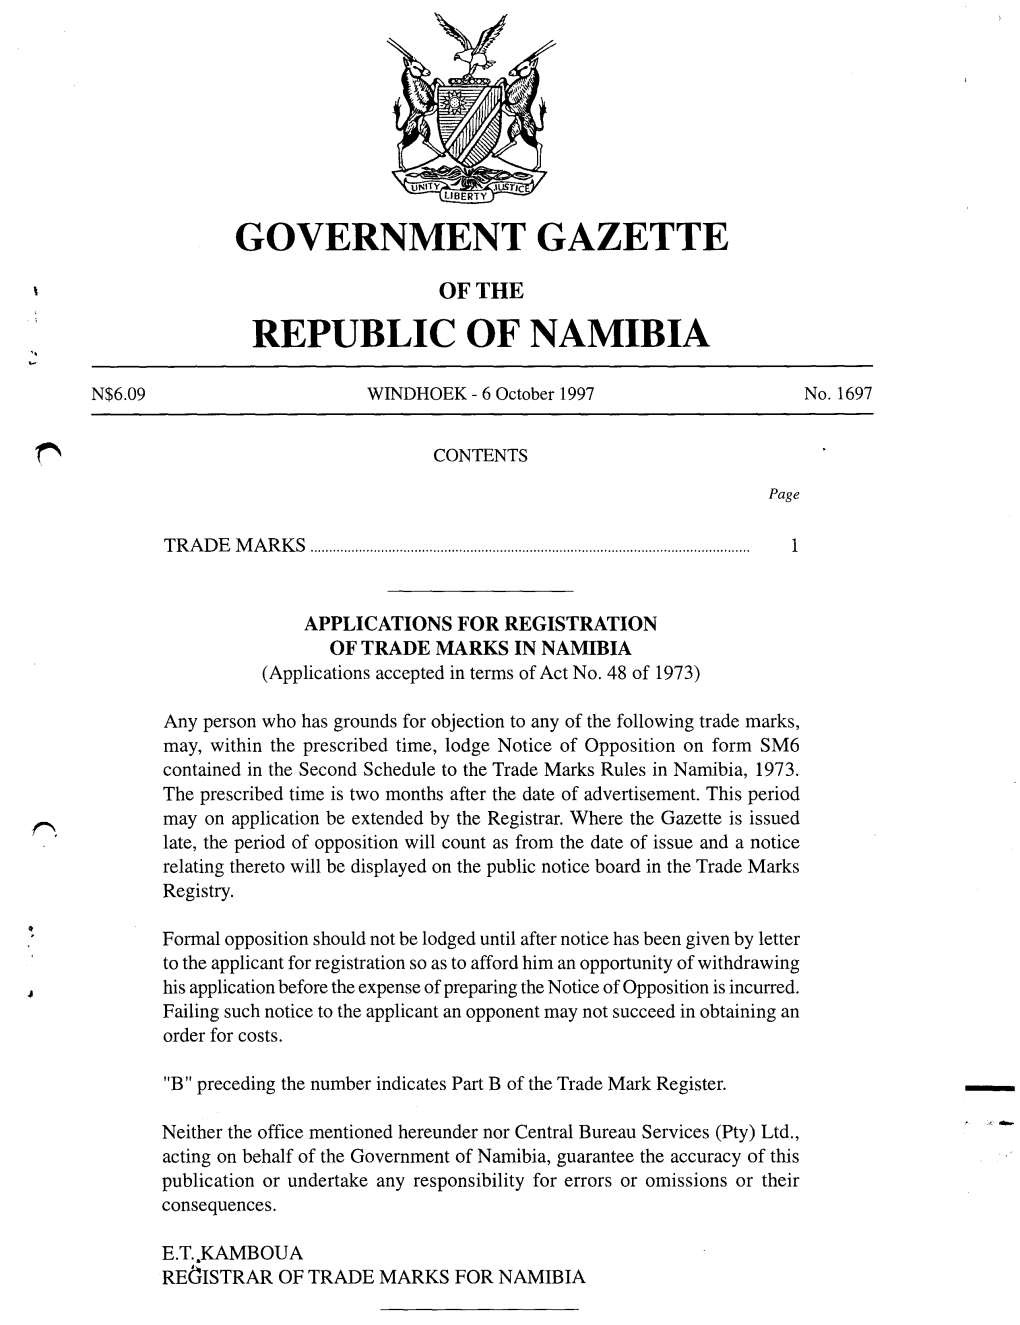 Government Gazette Republic of Namibia